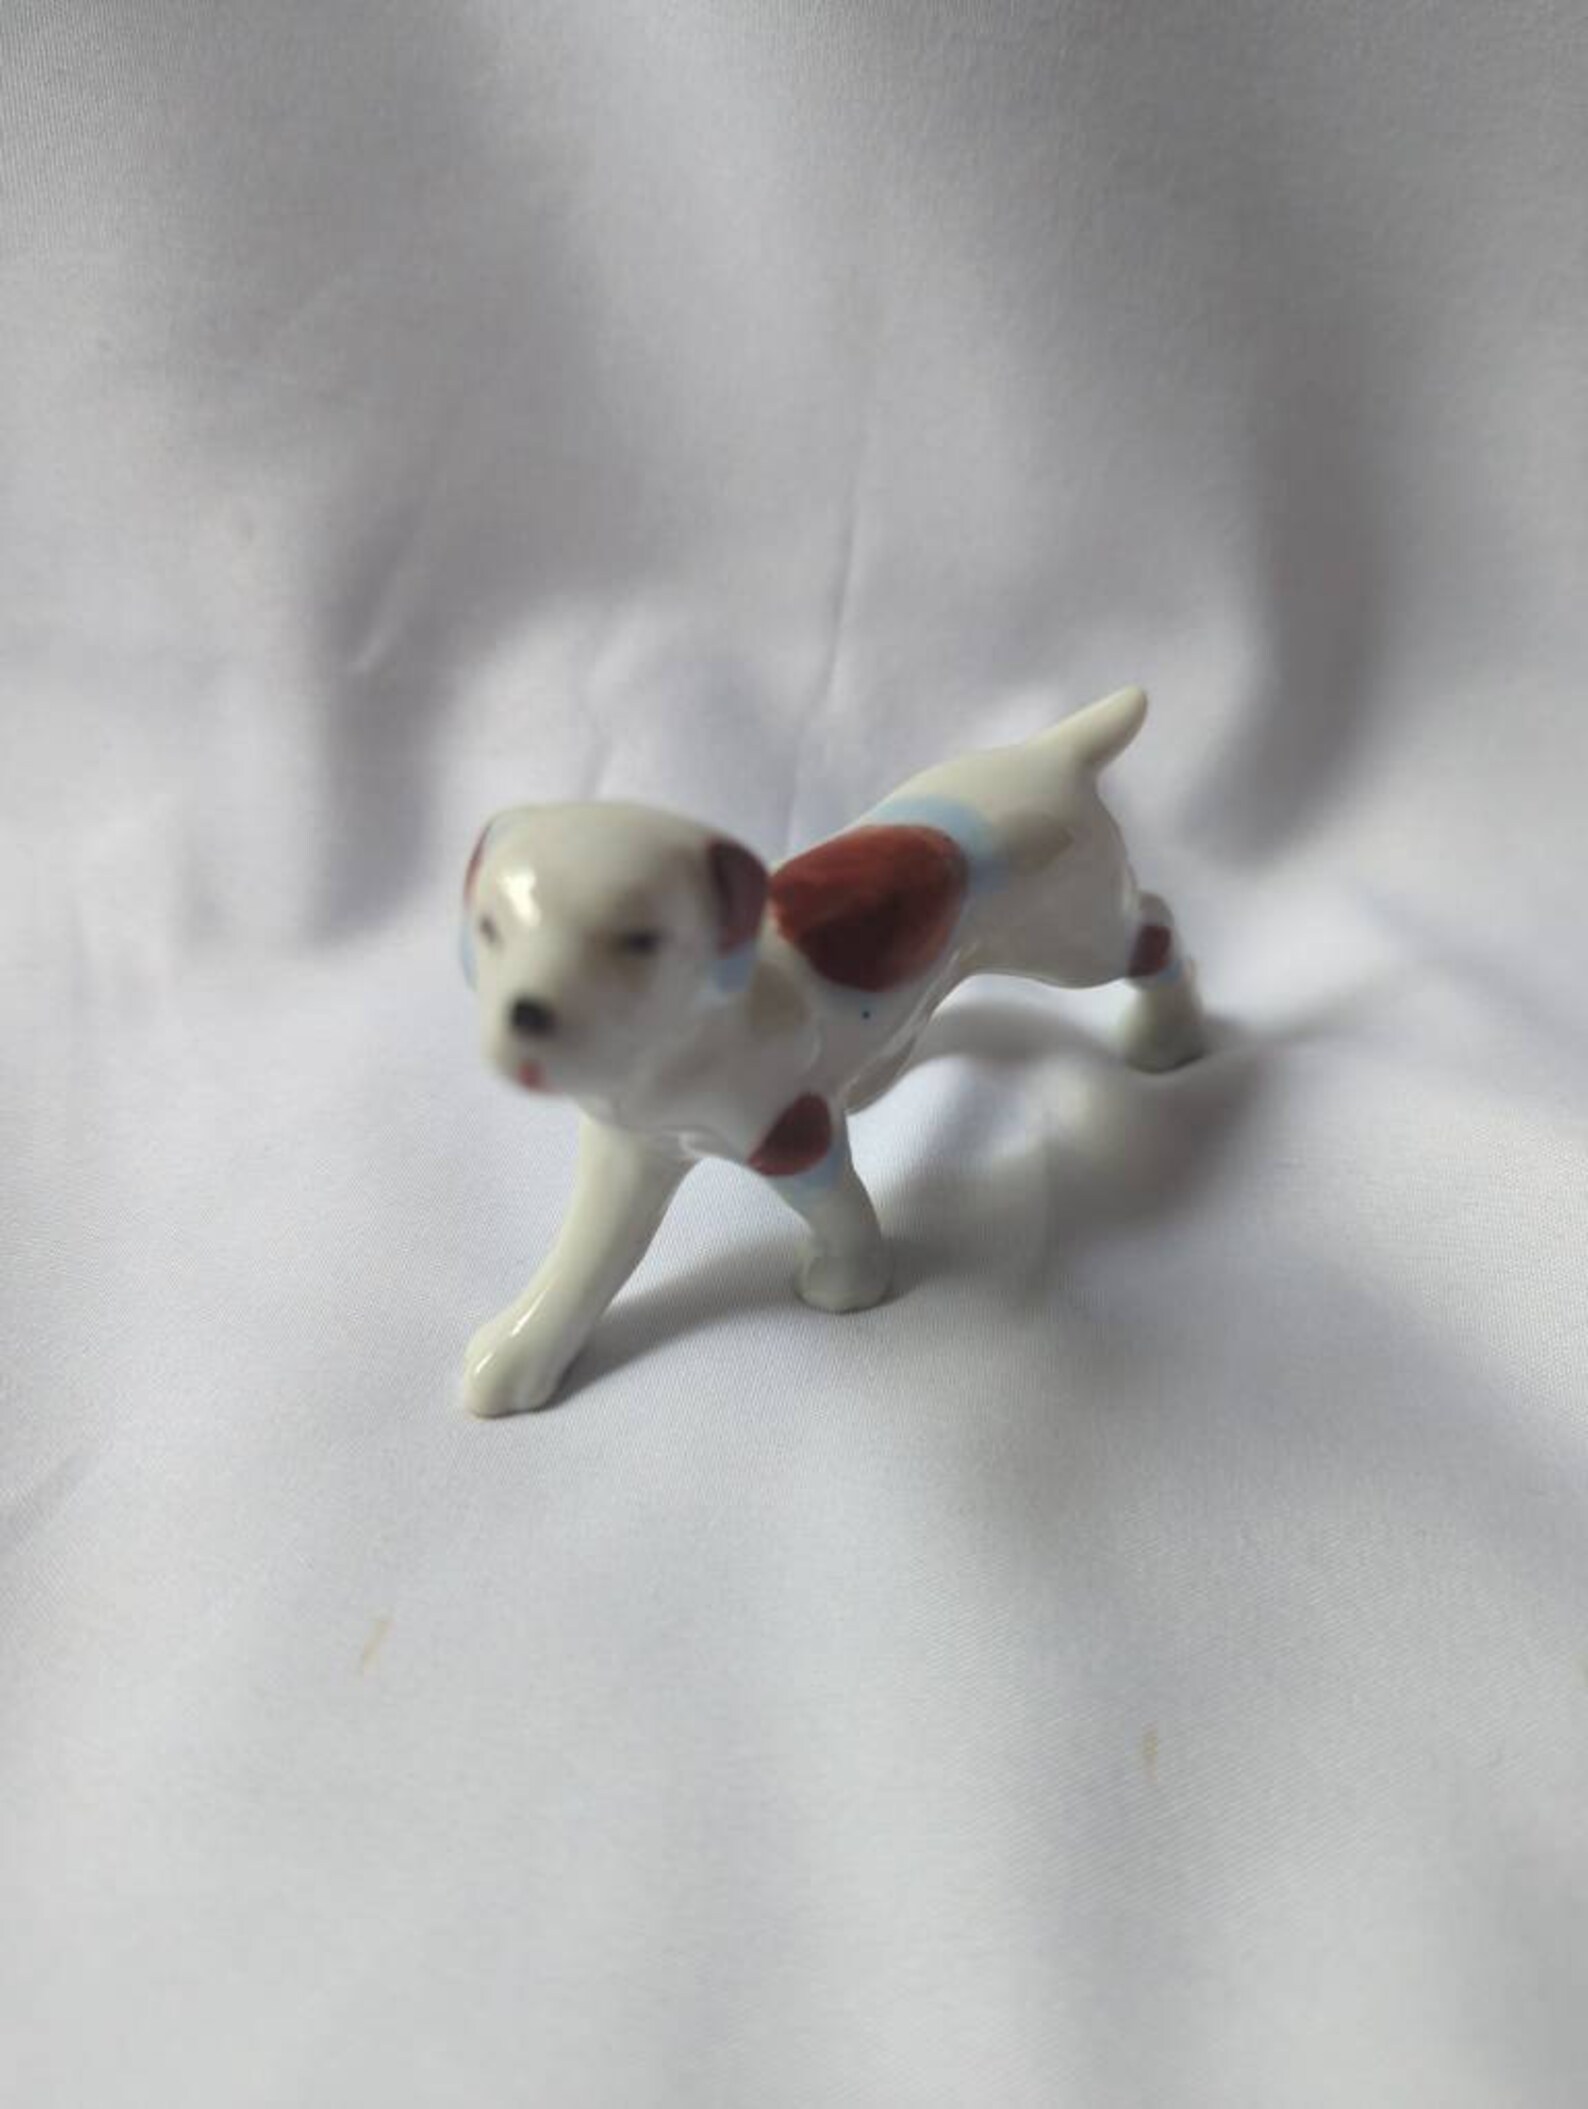 Dog Figurine PICO Occupied Japan Minature China Hunting | Etsy